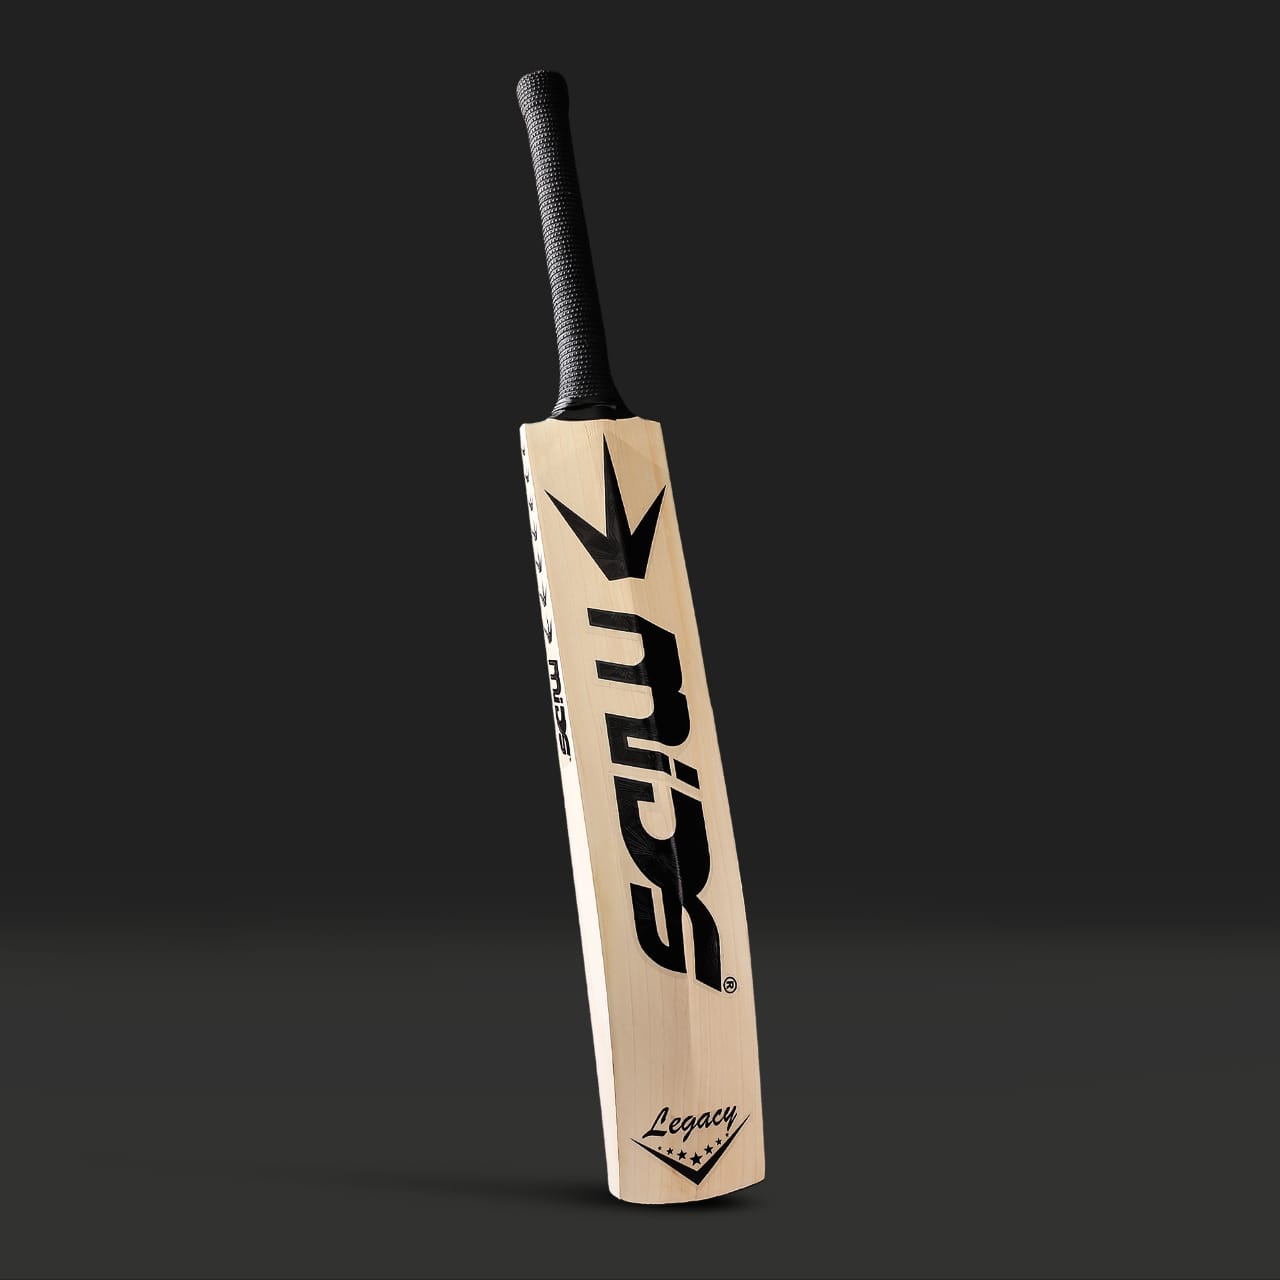 MIDS Legacy 7 star Grade 1+ English Willow (Pro Grade) Cricket Bat SH 2.6 Lbs